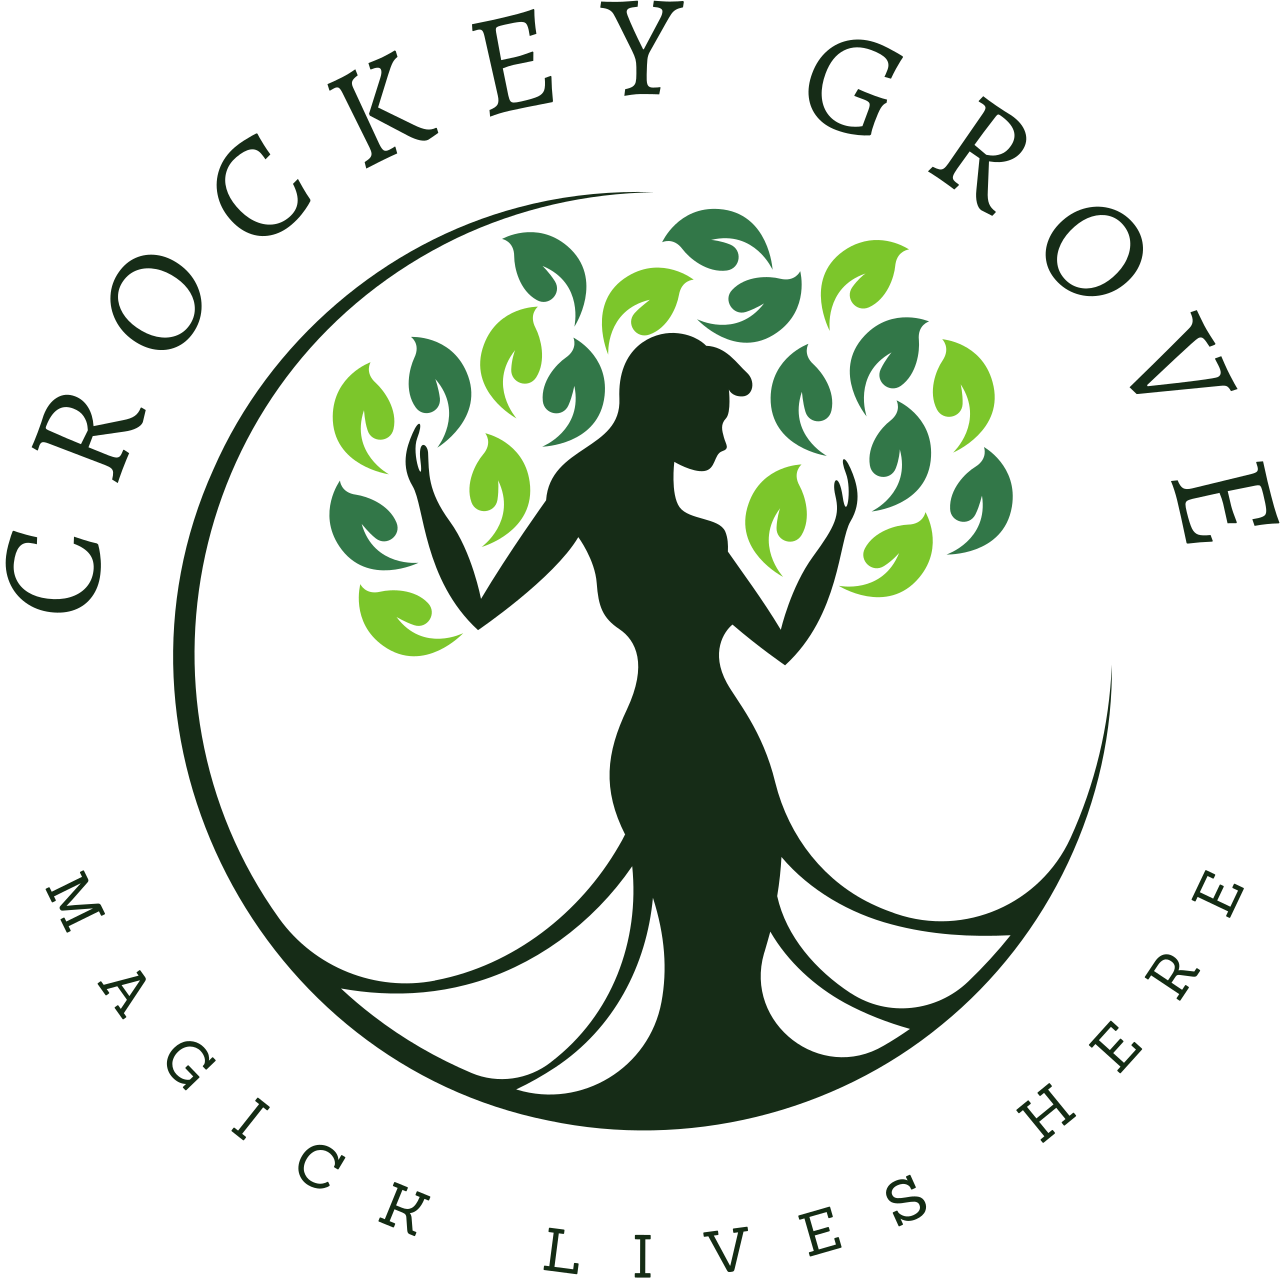 Crockey Grove 's logo